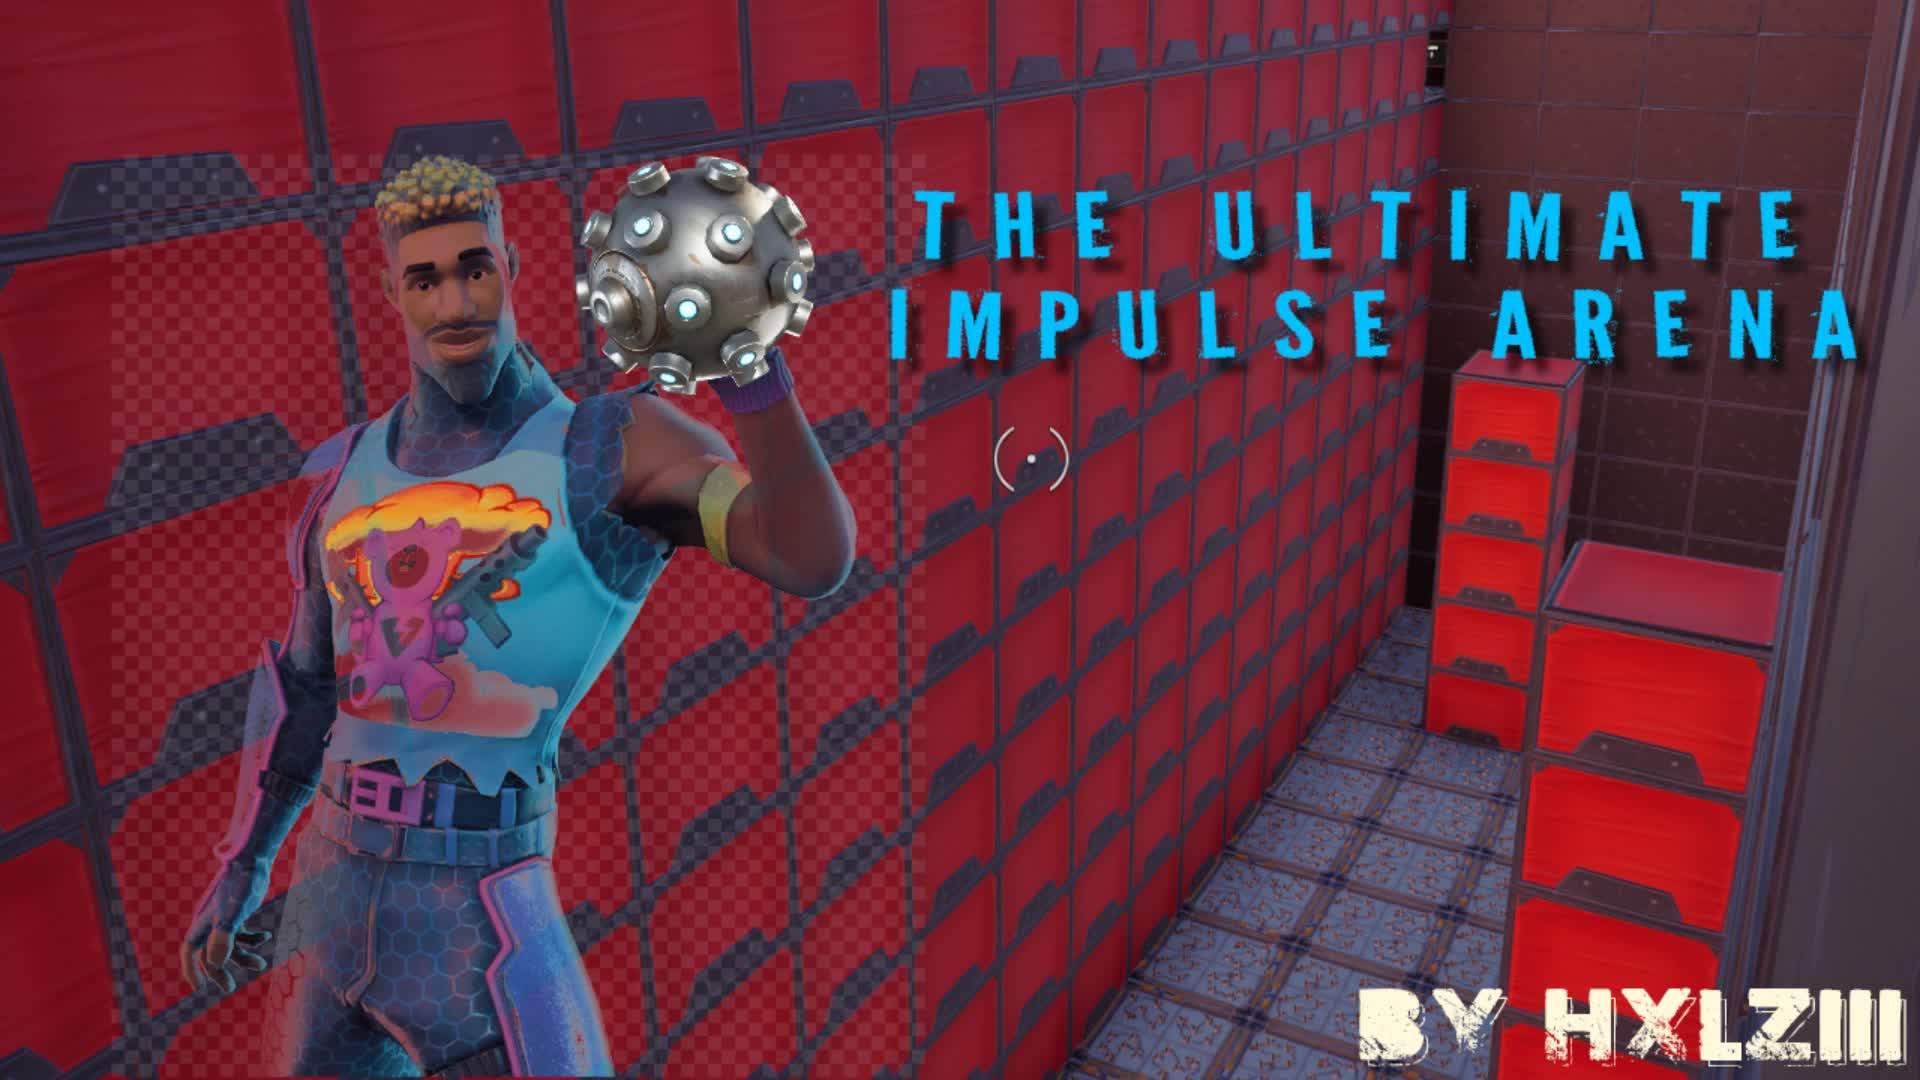 The Ultimate Impulse Arena